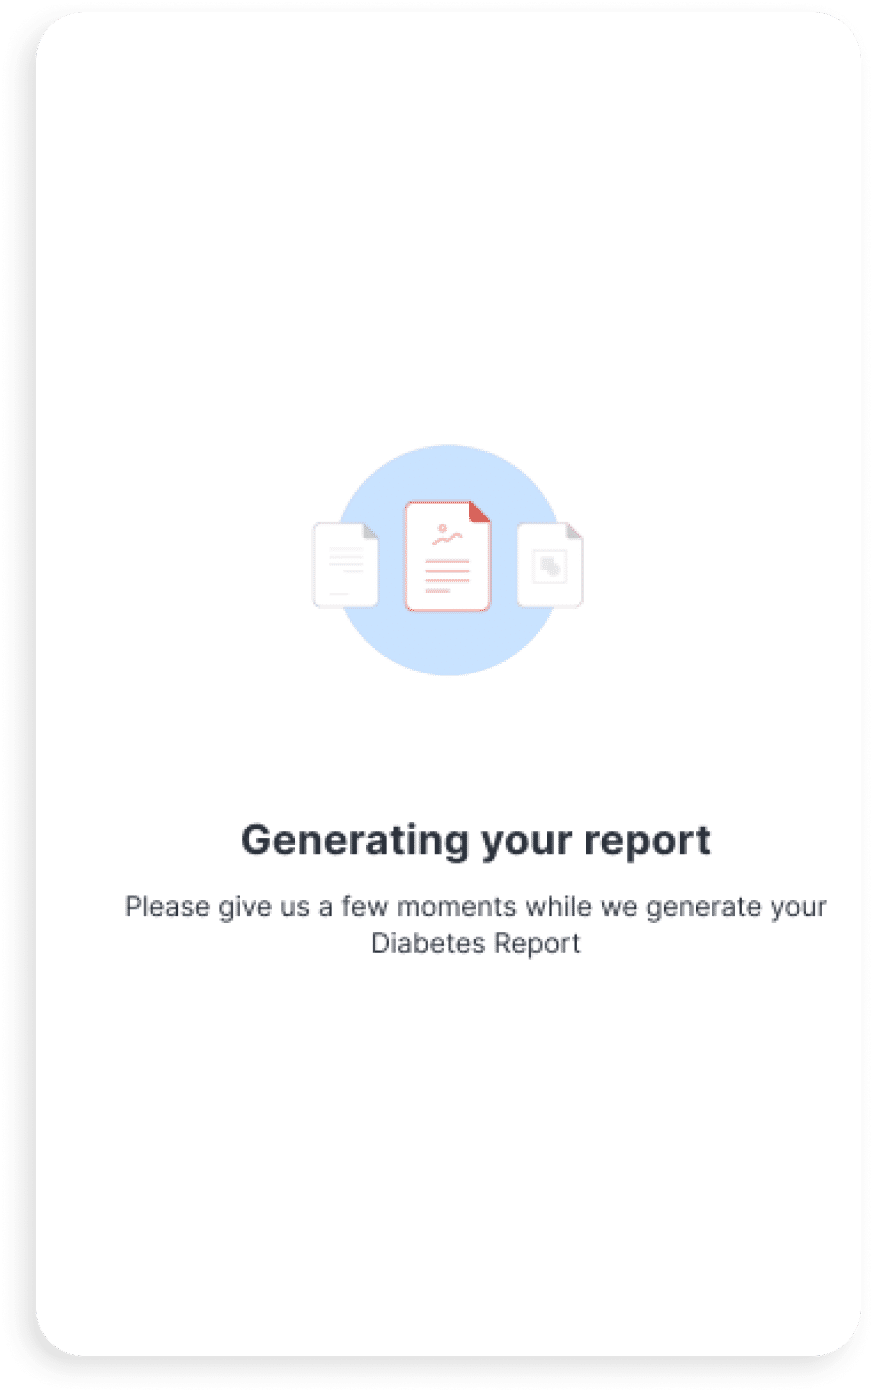 Generating Report Image